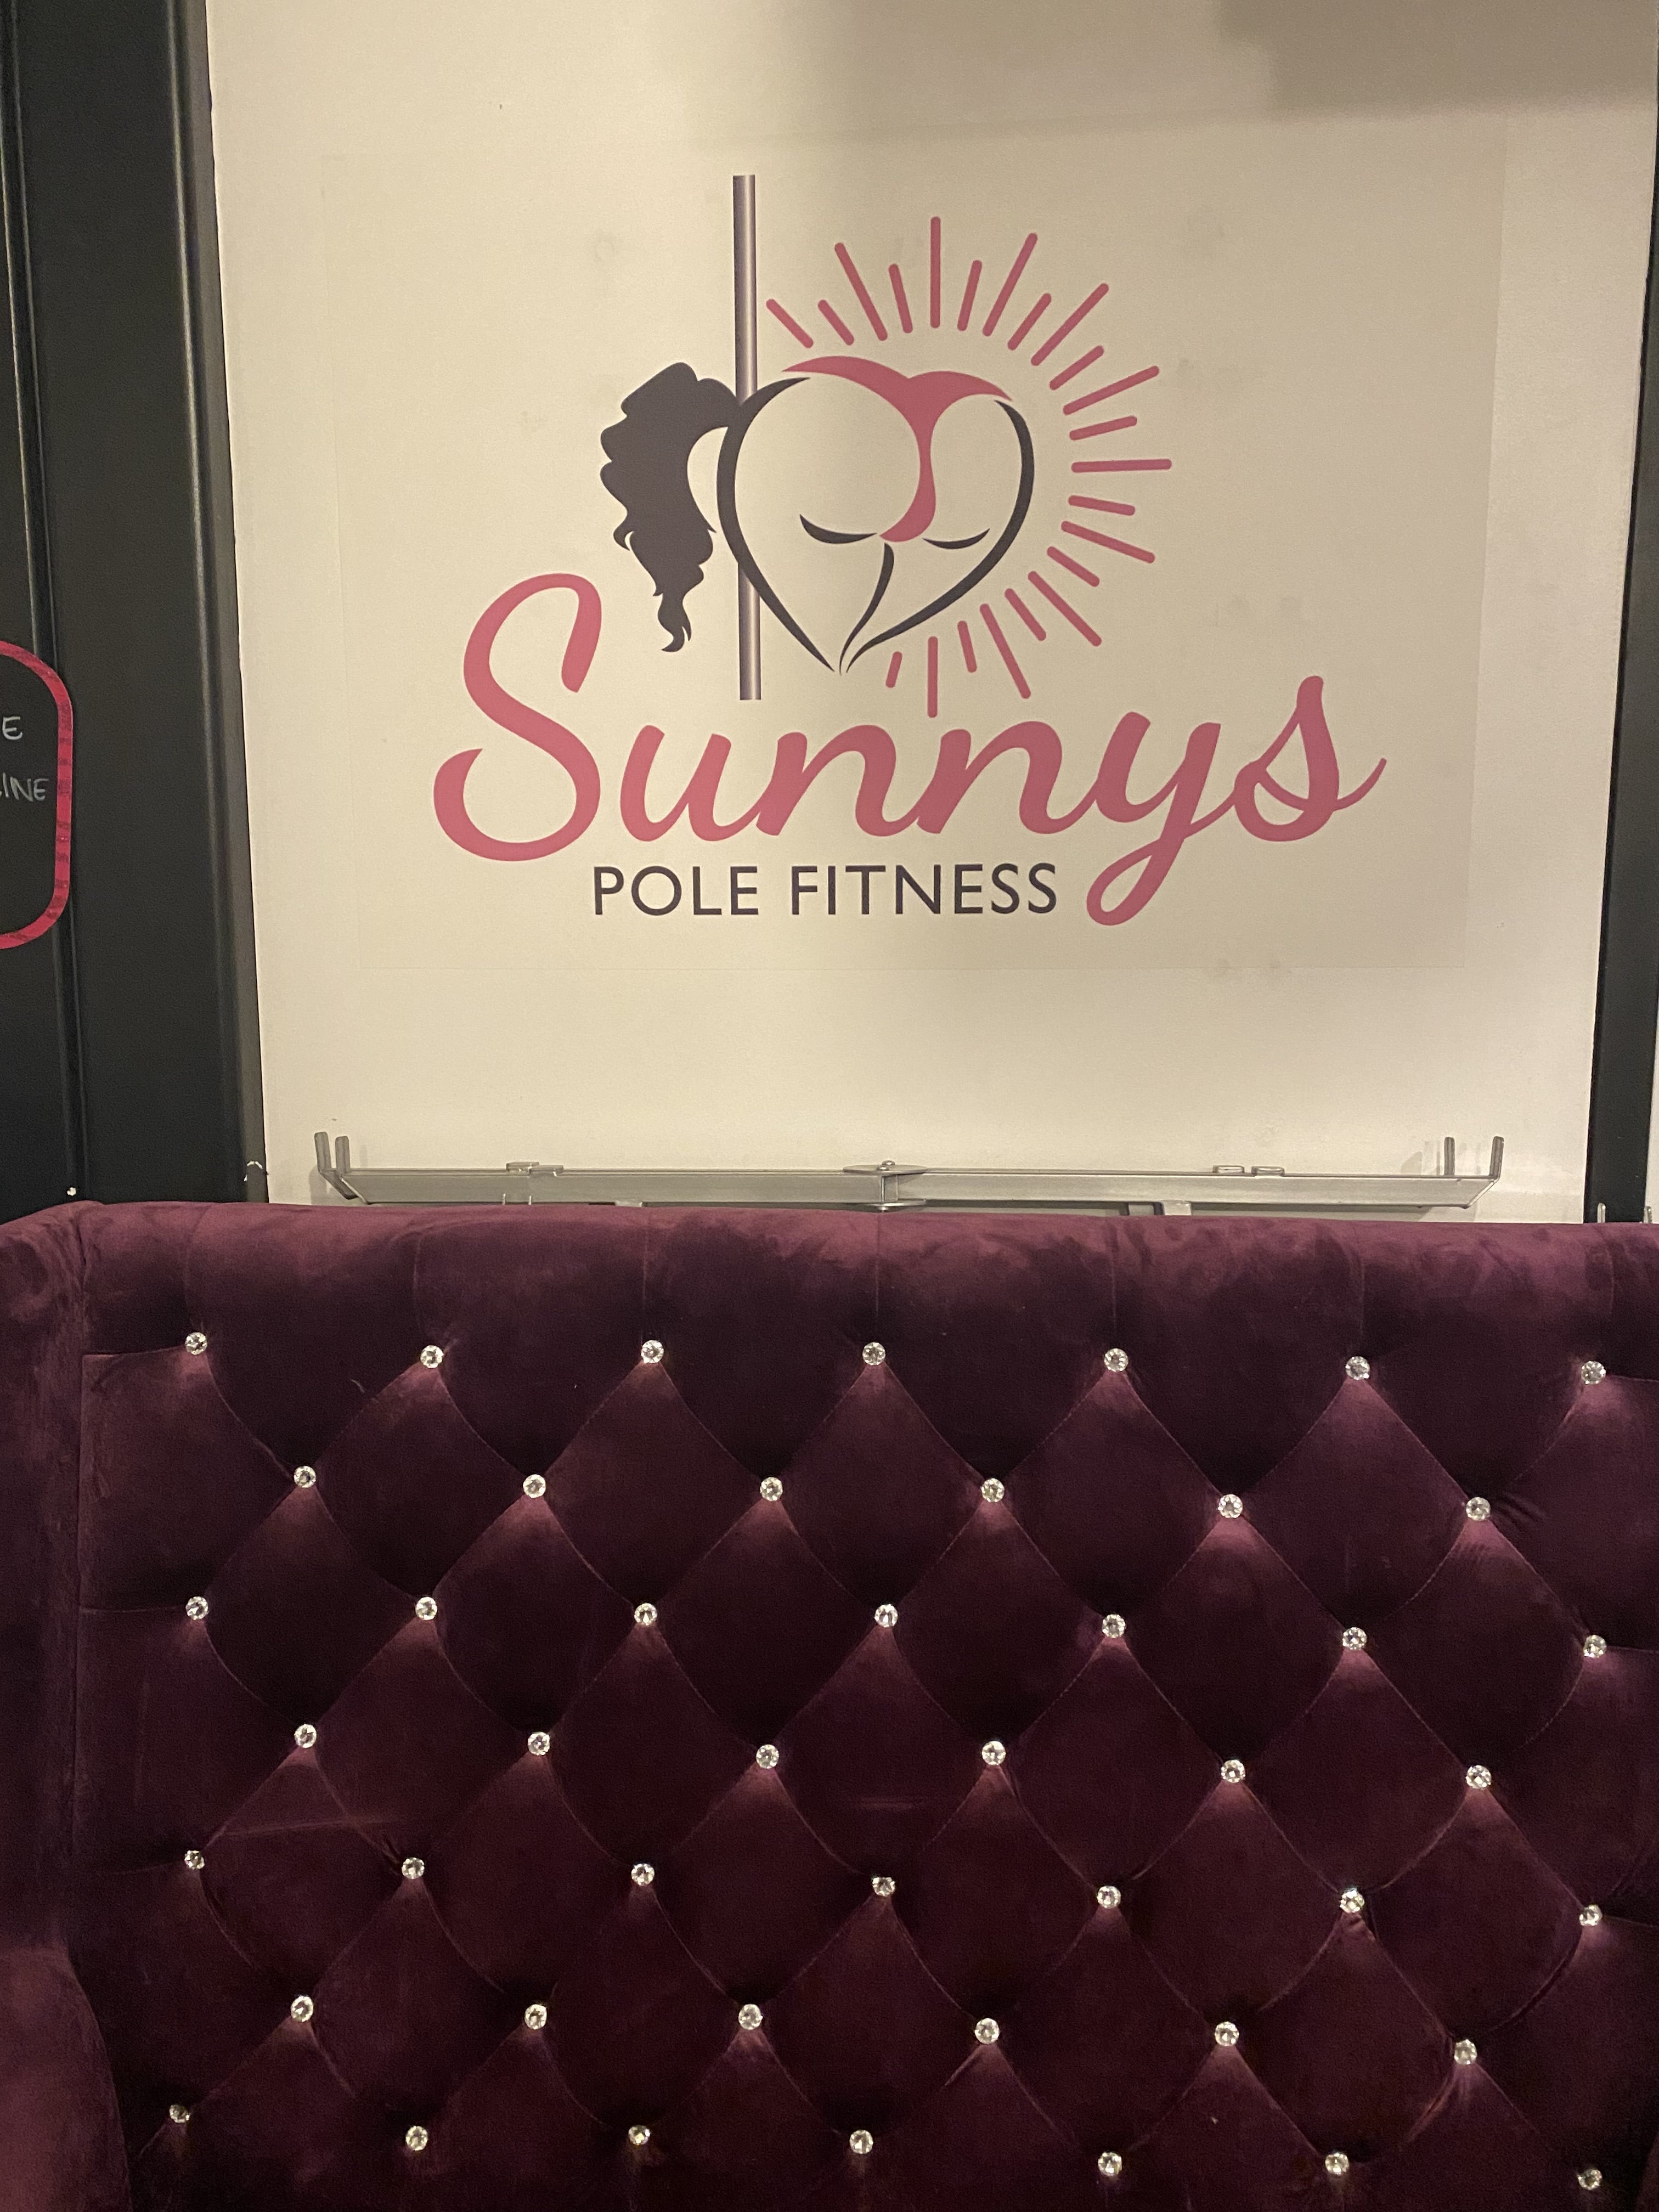 sunnys pole fitness studio in vegas logo